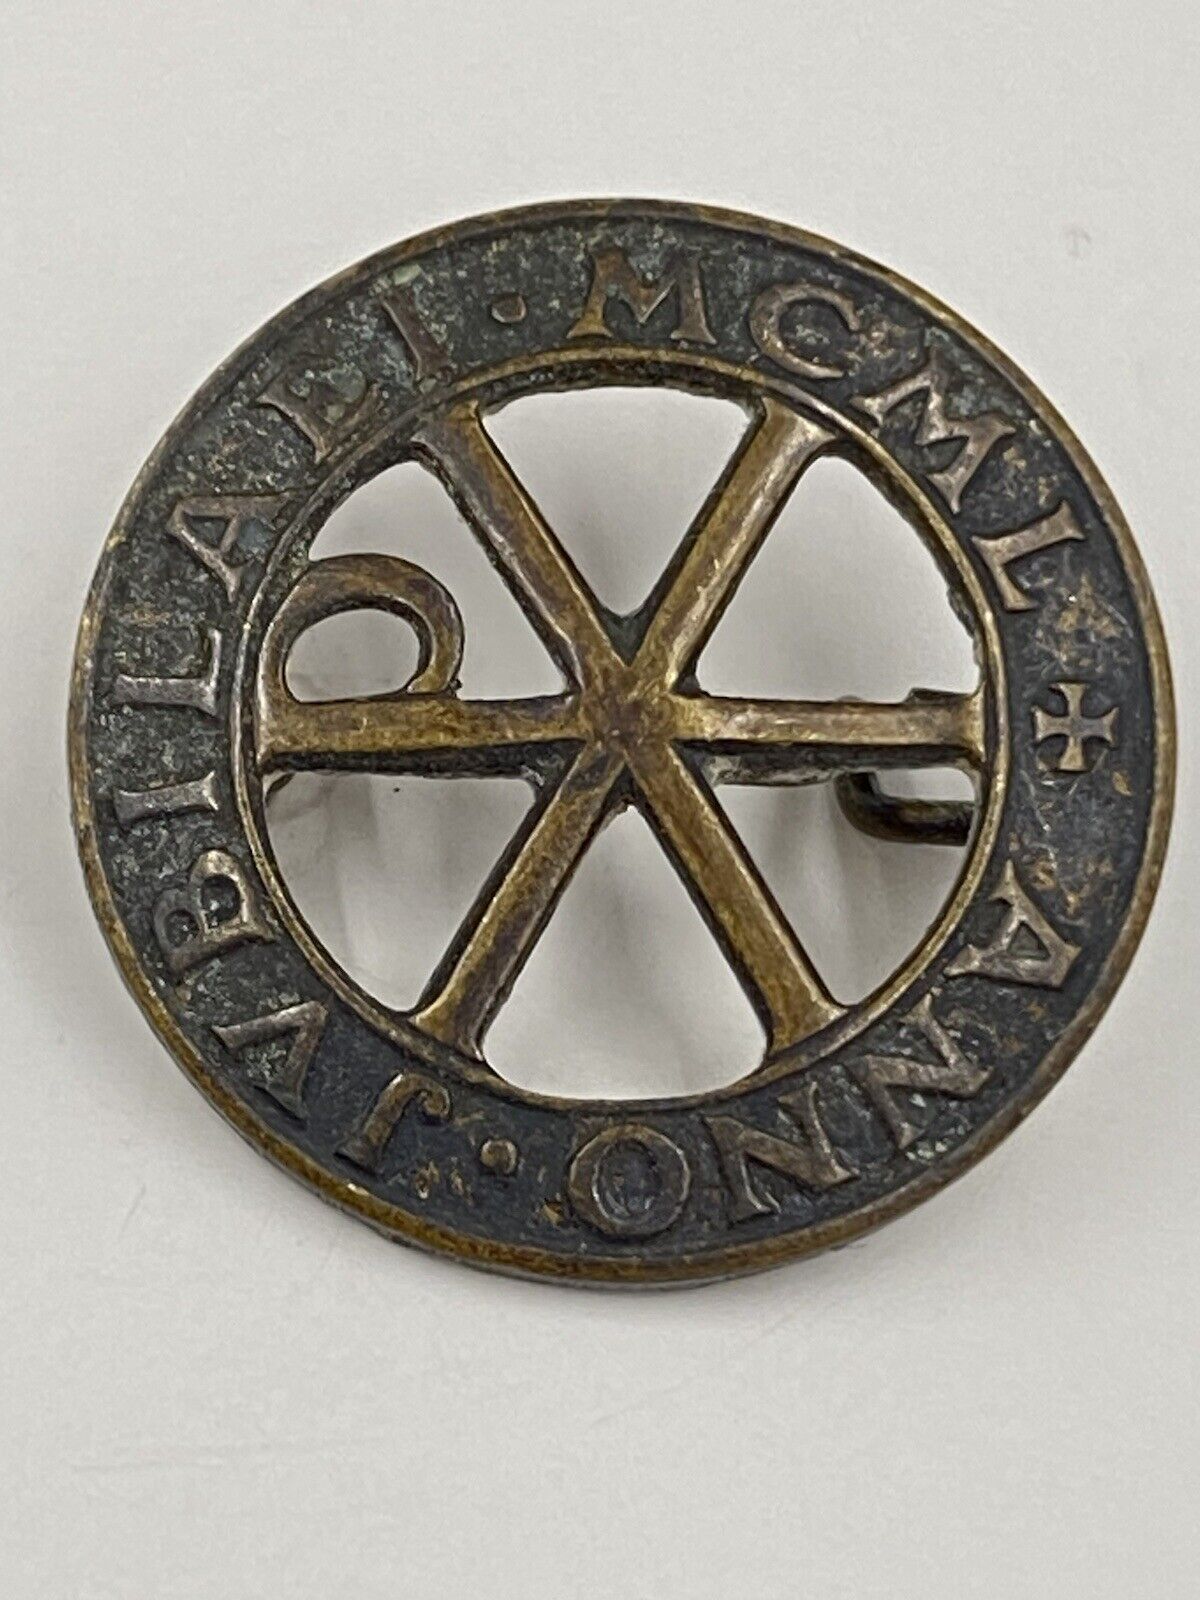 Vintage ANNO JUBILA Religious Jubilee MCML 1950 Labarum Lapel Pin Brooch Badge